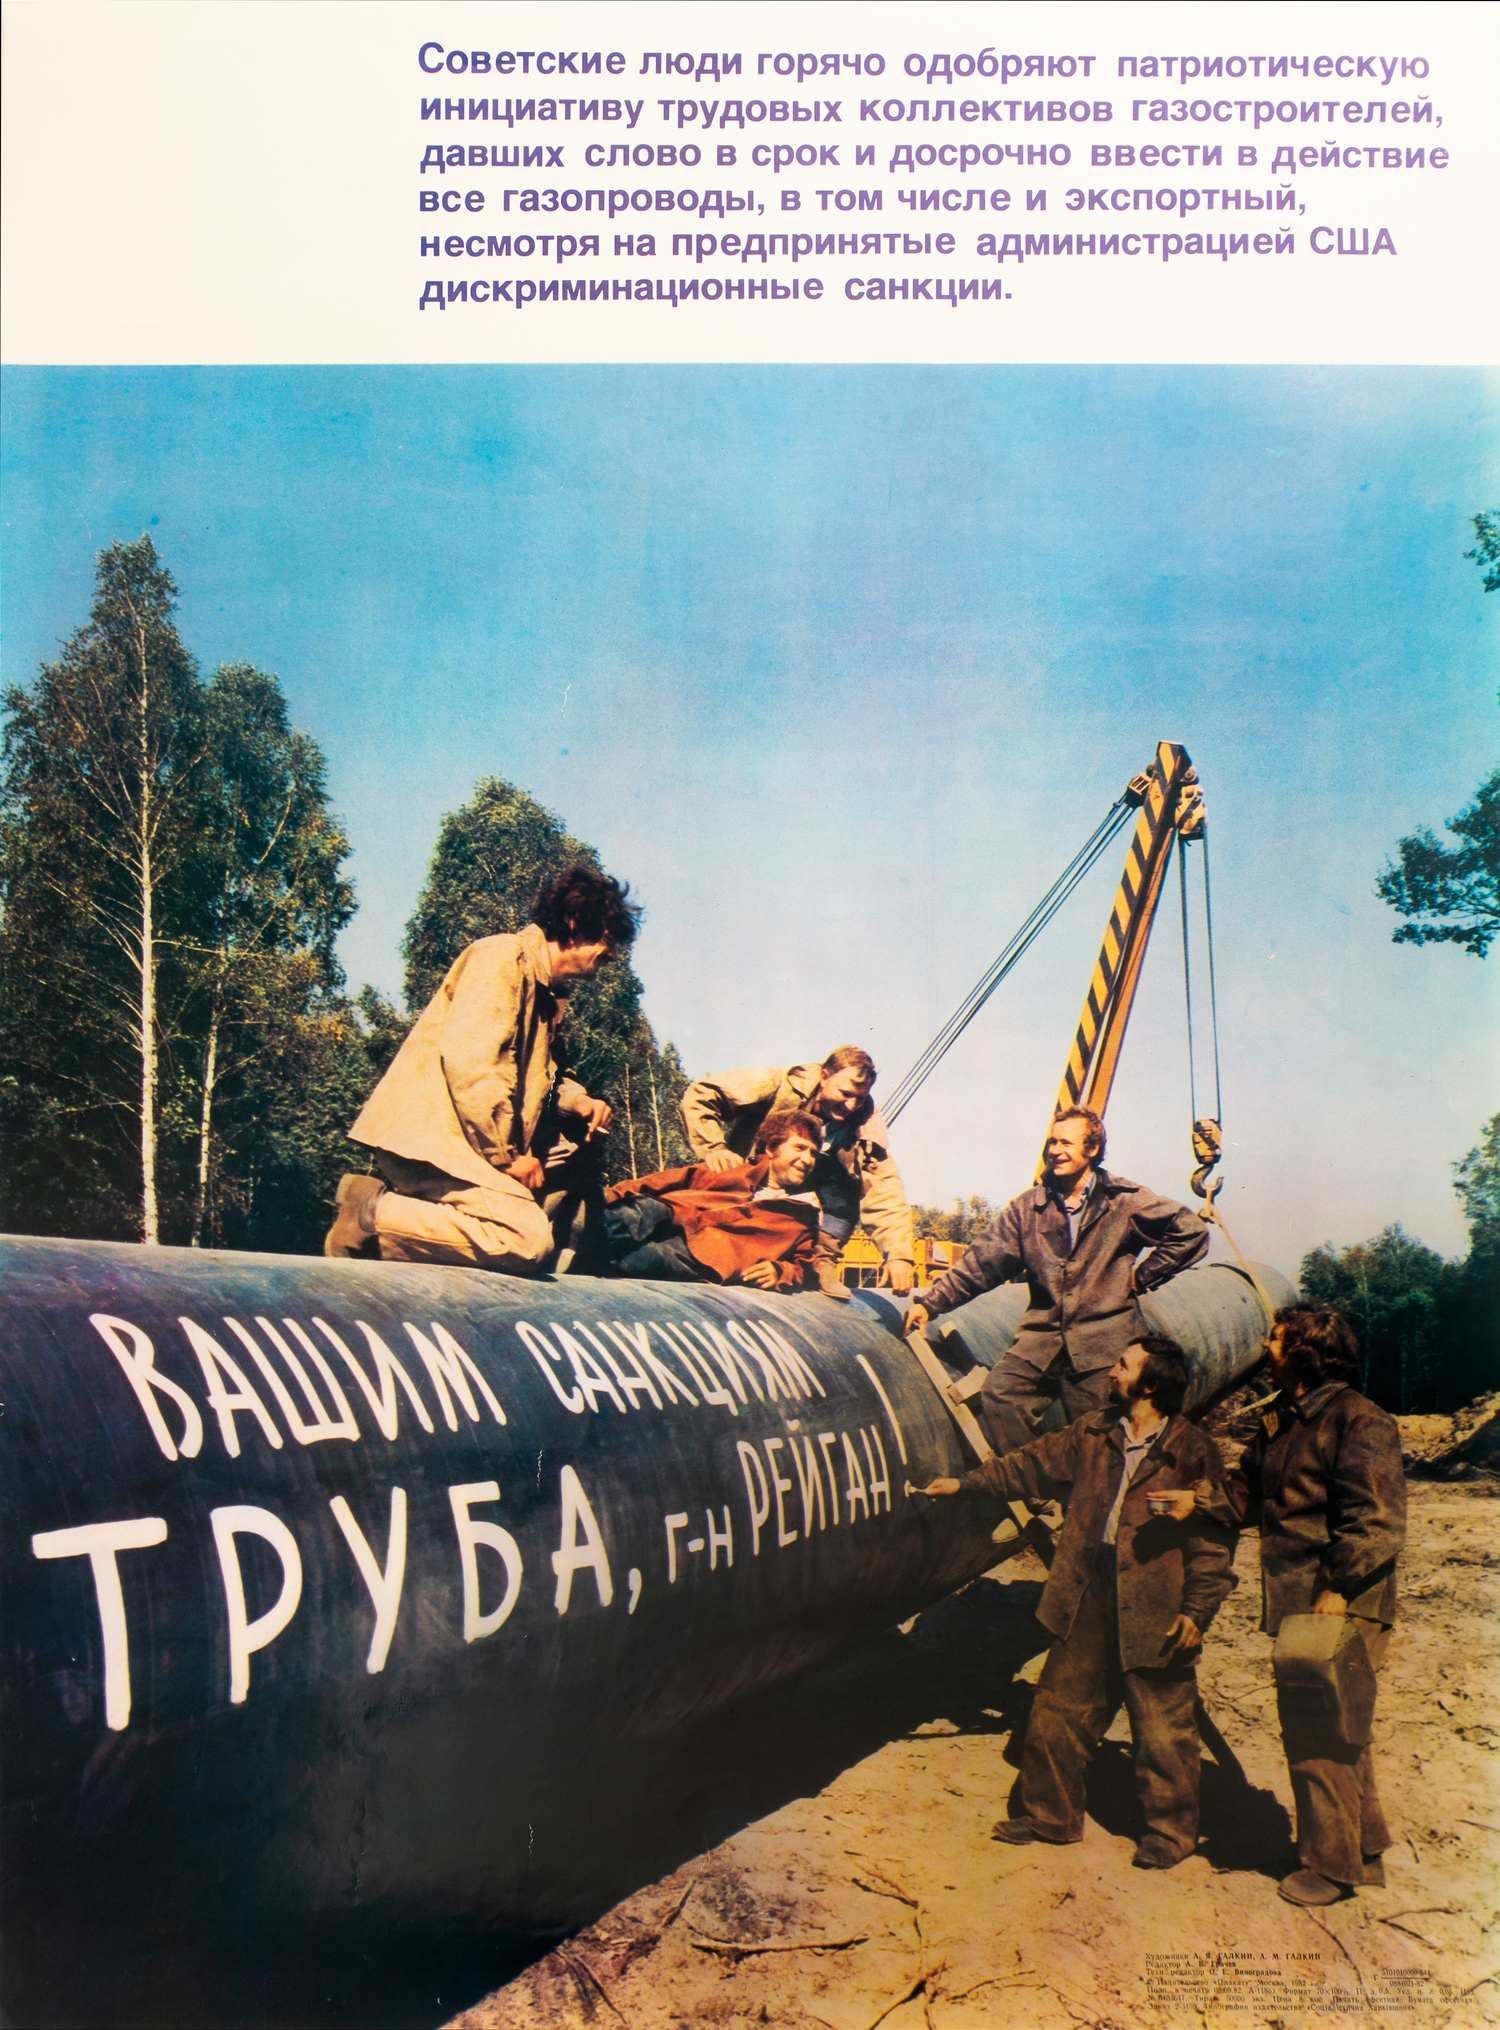 Галкин А.Я., А.М. Галкин. Плакат. «Советские люди горячо одобряют патриотическую инициативу..». 1982.